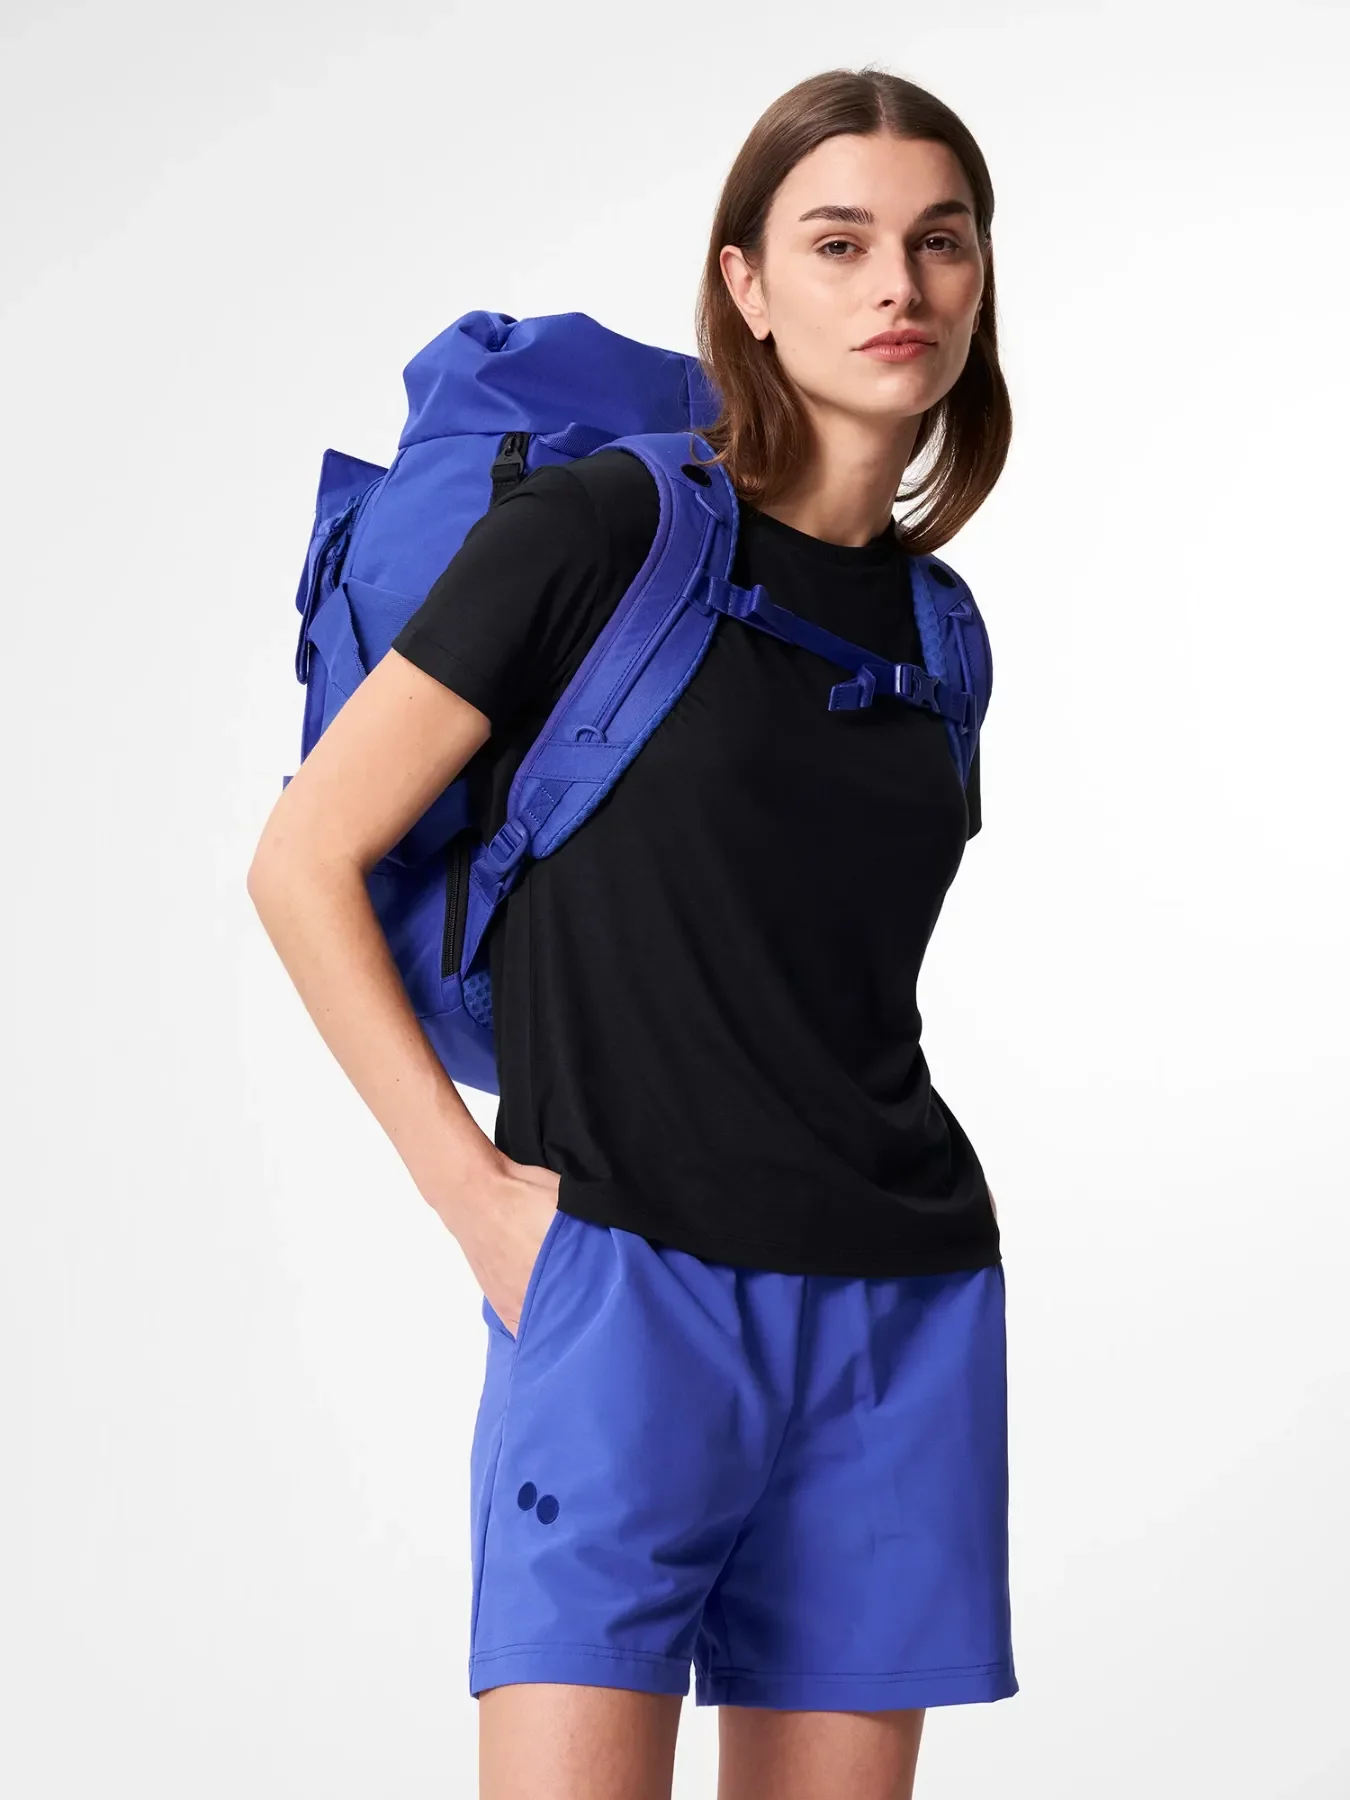 pinqponq Backpack BLOK medium Construct - Poppy Blue 8